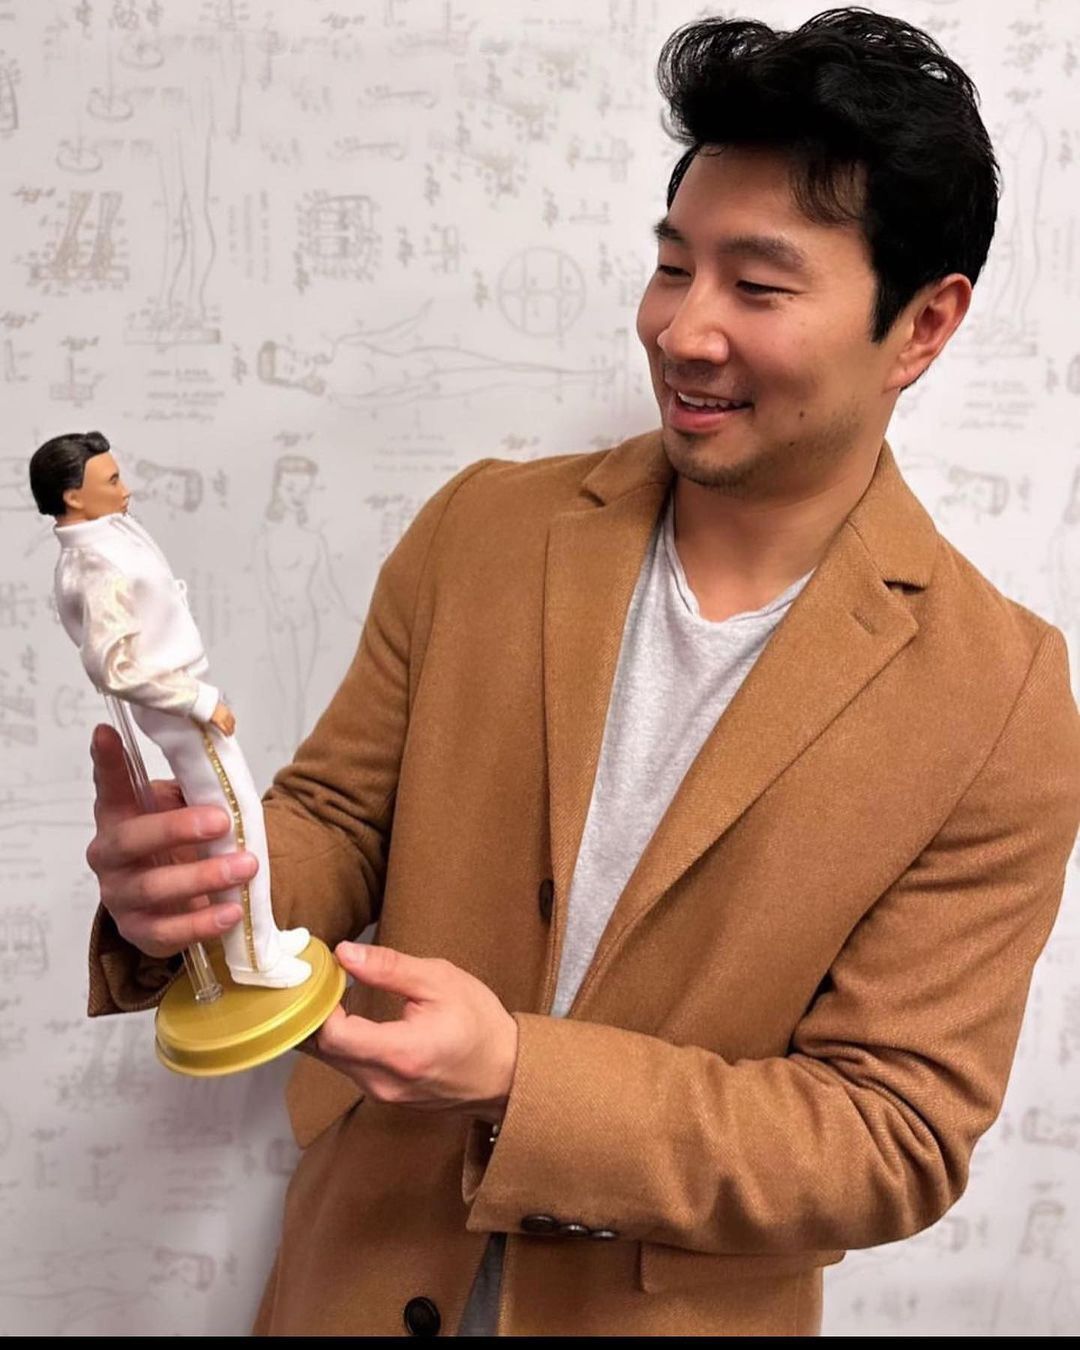 Simu Liu (Ken) - Celebrity Doll Museum